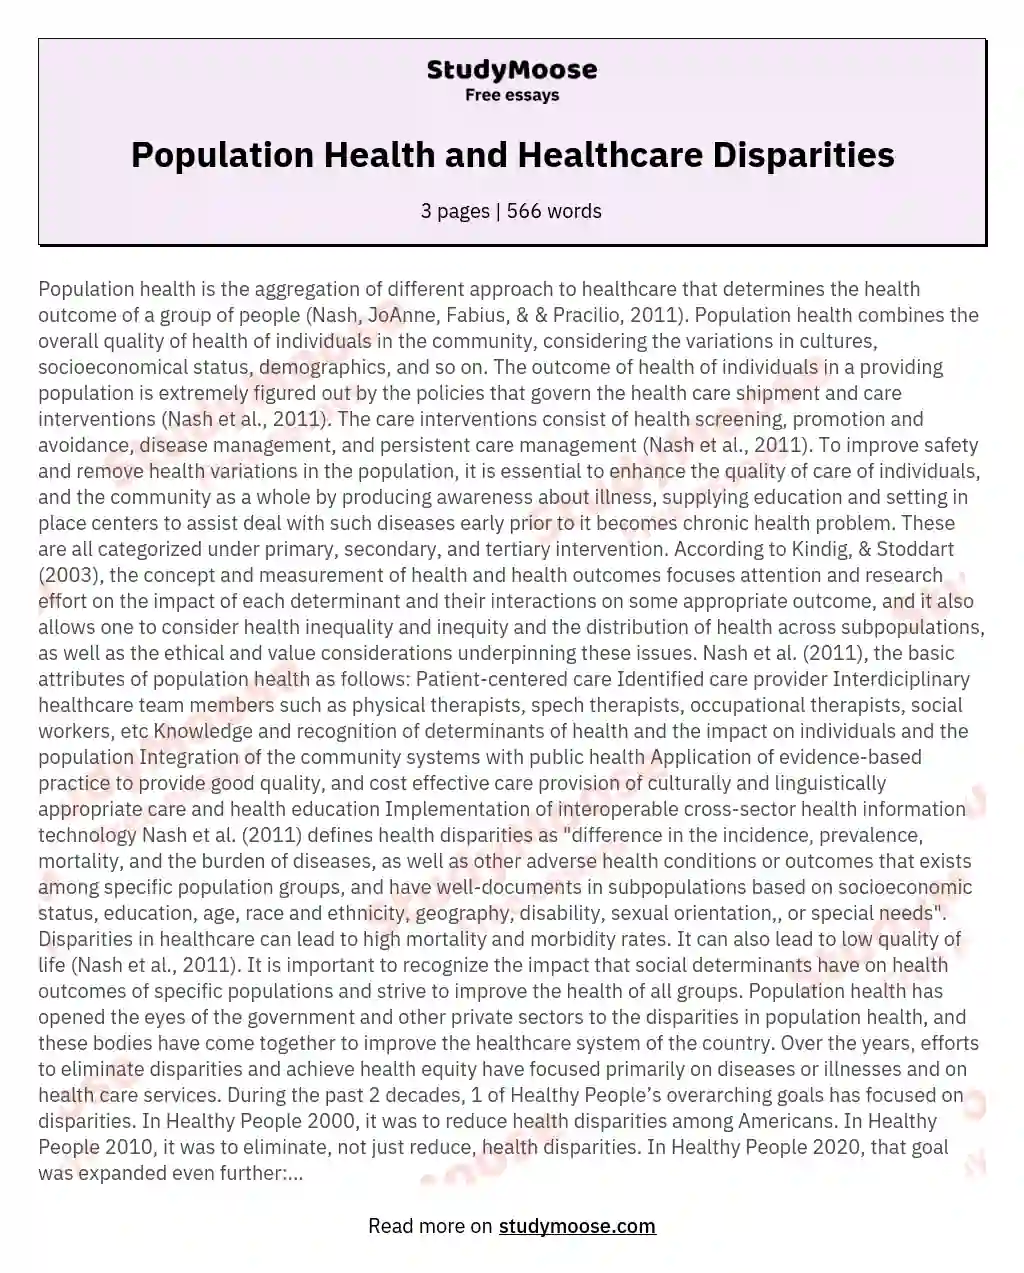 Population Health and Healthcare Disparities essay